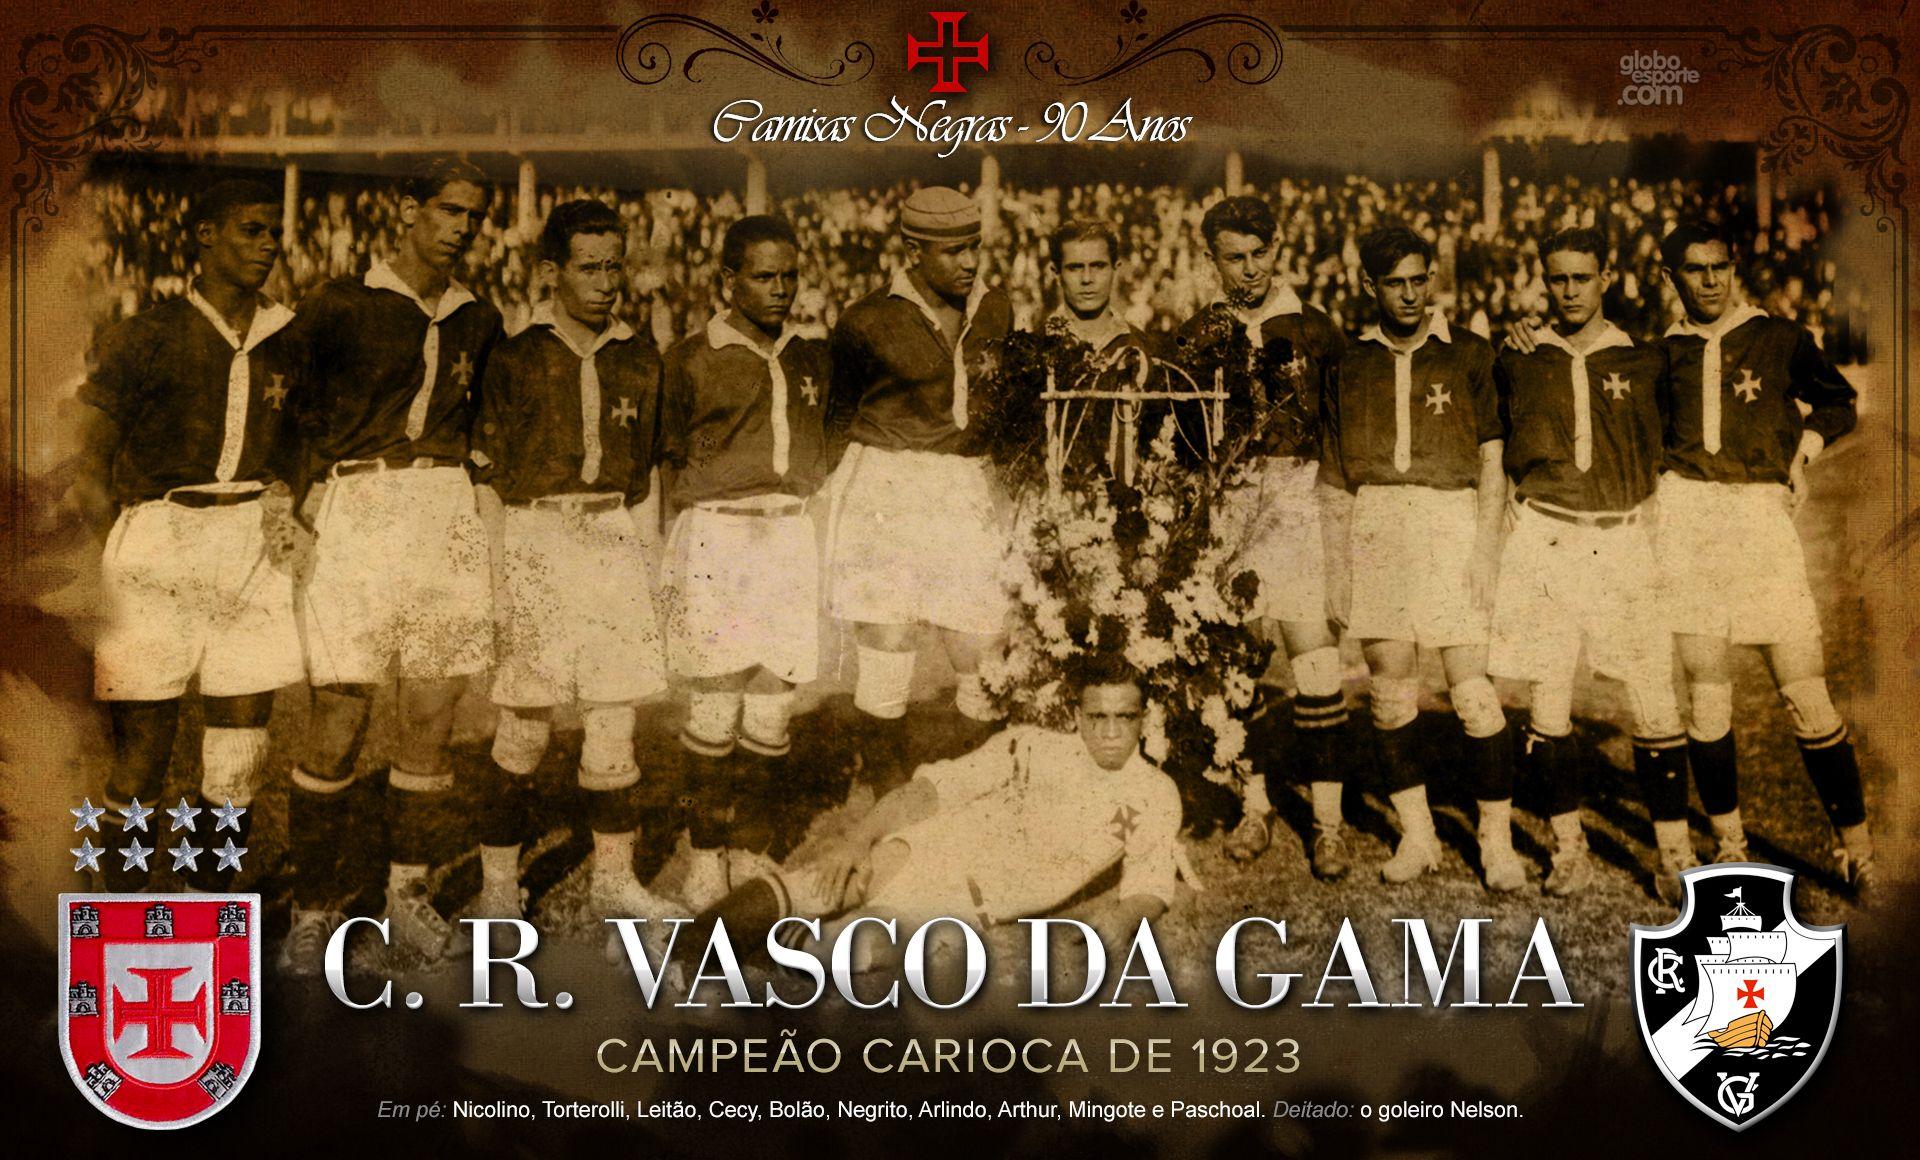 best image about Vasco. Bellinis, Patriots